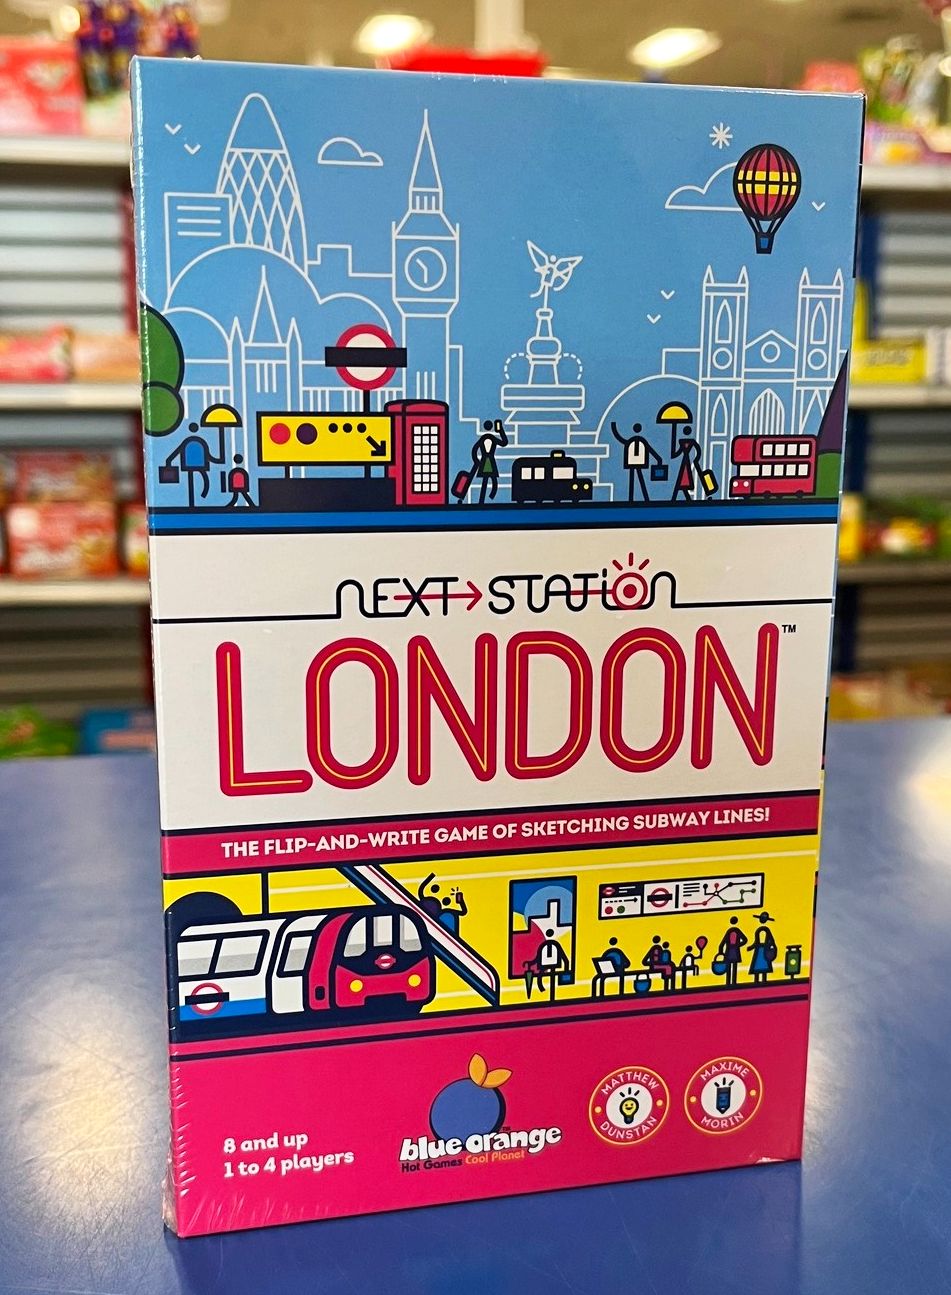 Next-Station-London-game image